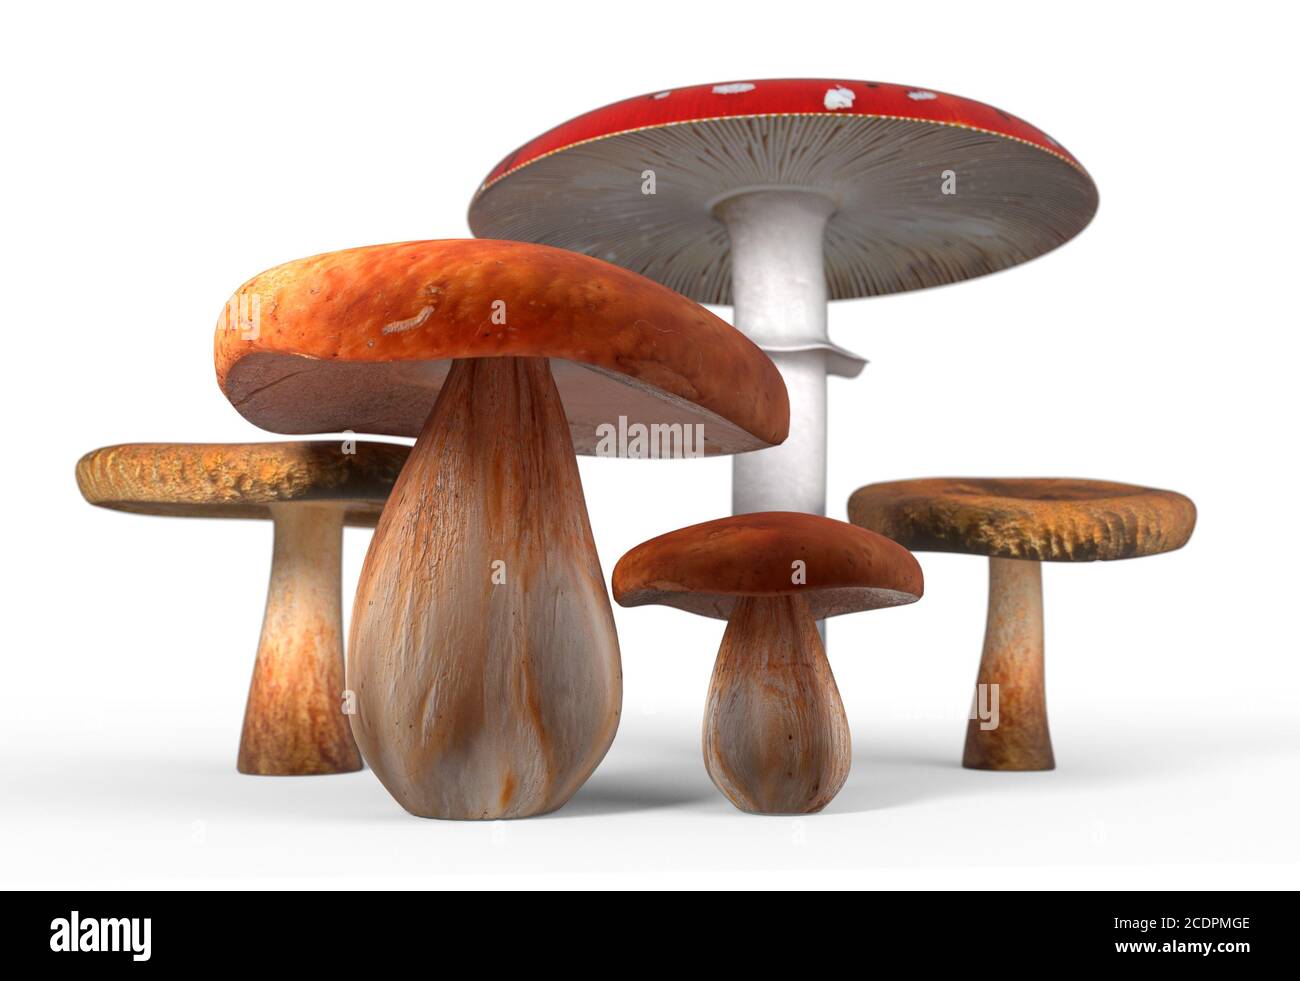 ceps, paxil, amanita muscaria mushrooms isolated on white 3d illustration Stock Photo